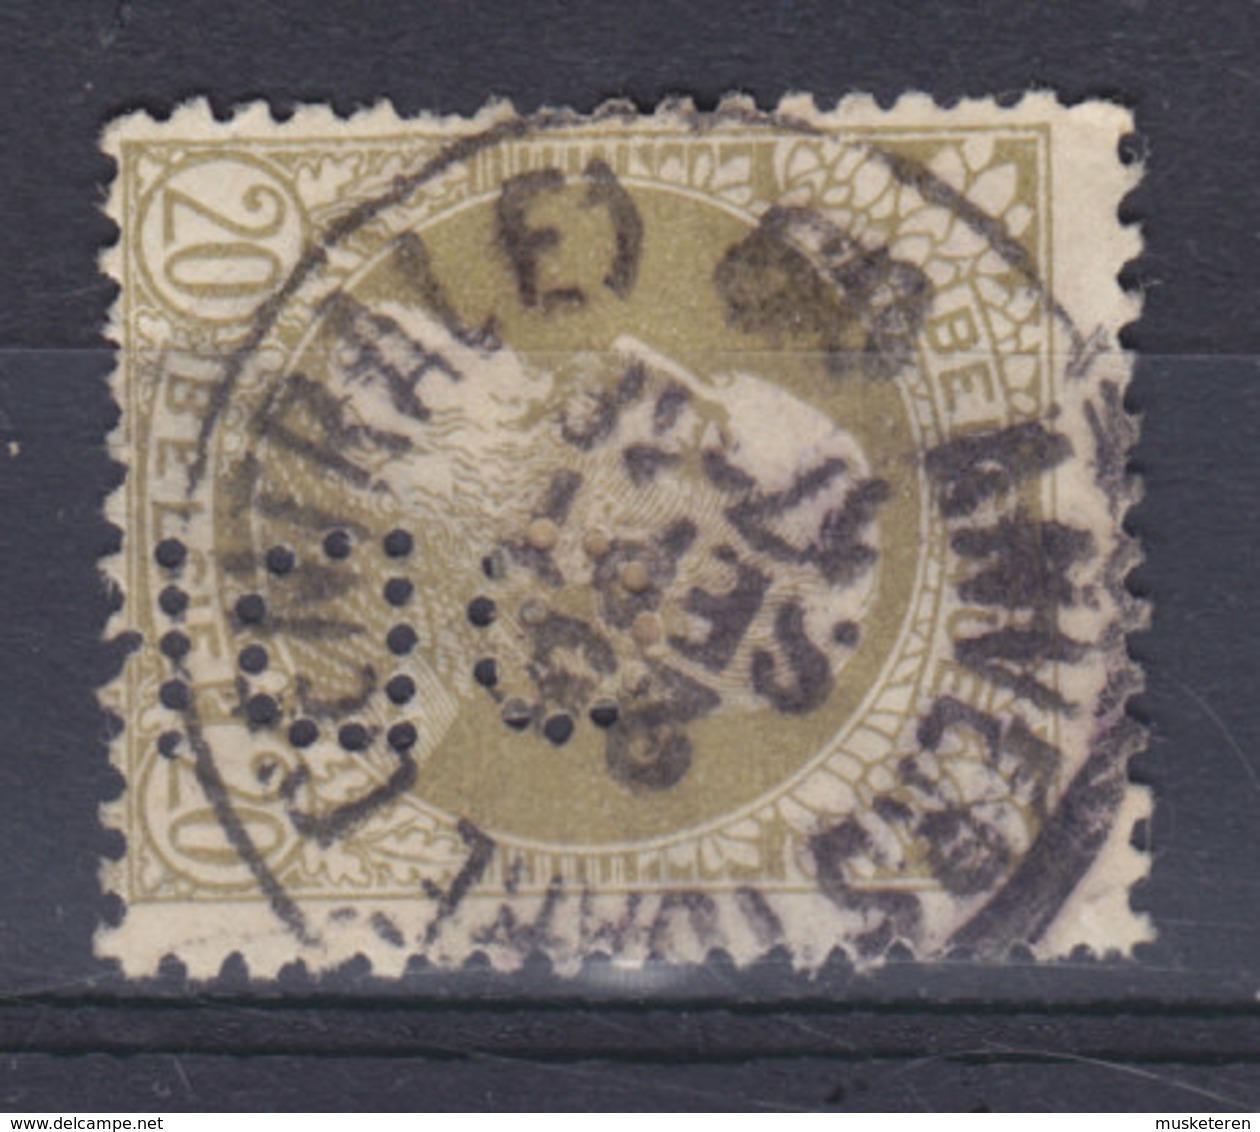 Belgium Perfin Perforé Lochung 'GDK?' Mi. 72, 20c. Leopold II. Stamp Deluxe ANVERS Cds. (2 Scans) - 1909-34